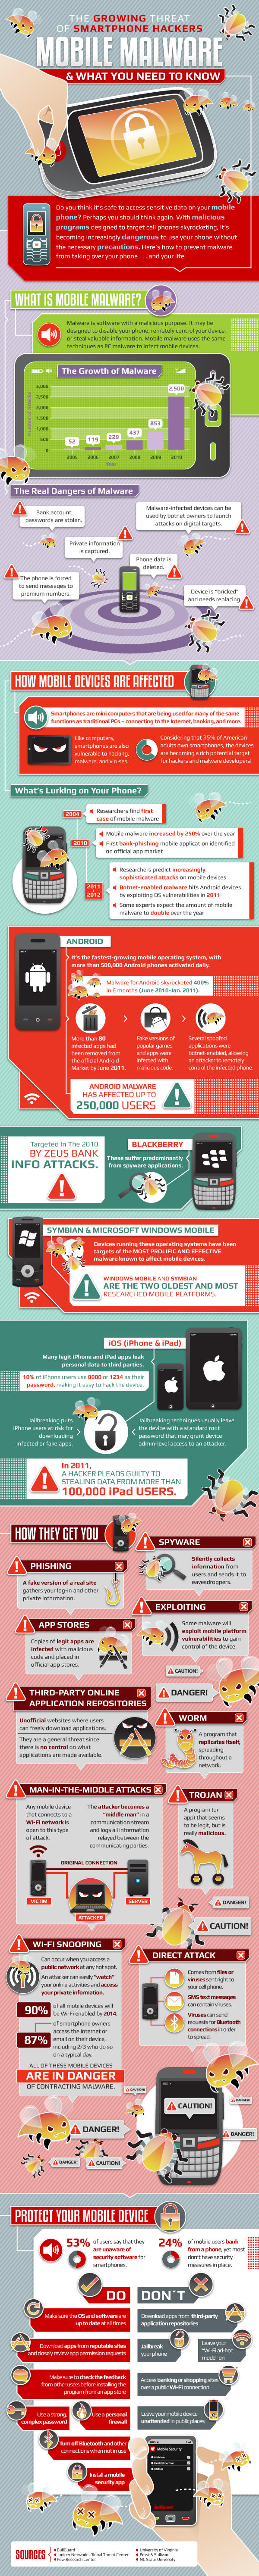 mobile_malware_infographic